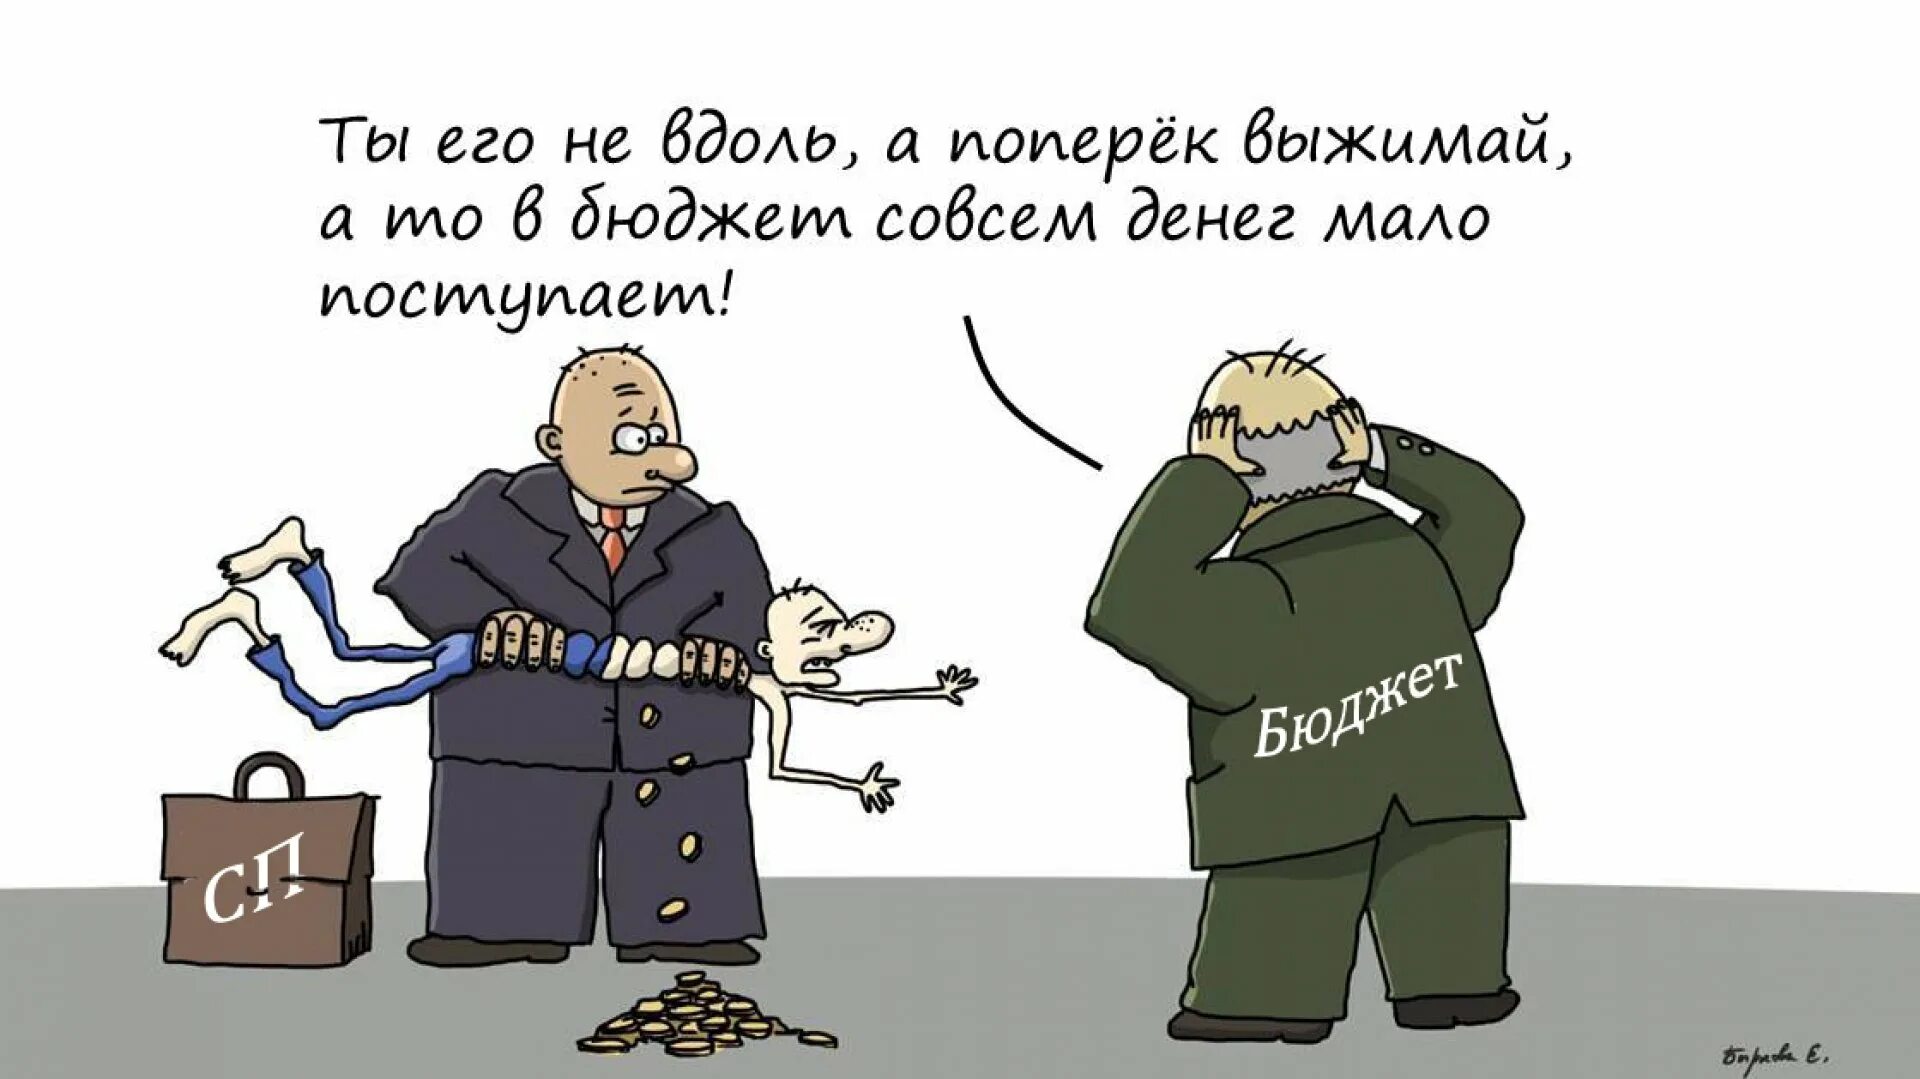 Налоги карикатура. Карикатуры про малый бизнес. Бизнес в России карикатура. Налоги прикол. Пришли большие налоги